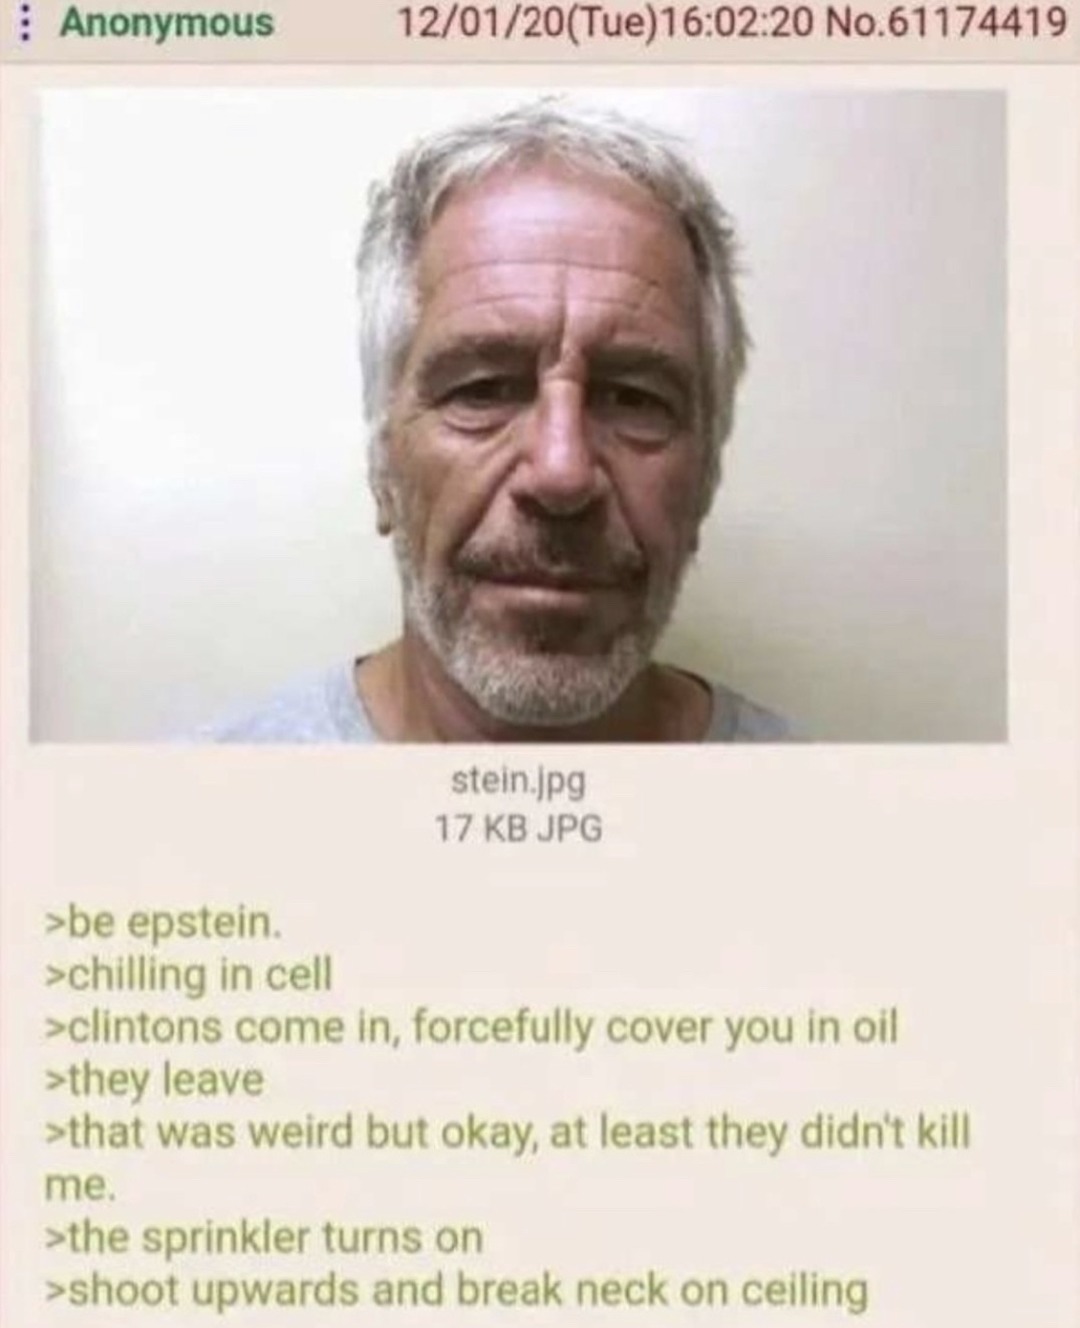 kill himself didn’t Epstein brah - meme